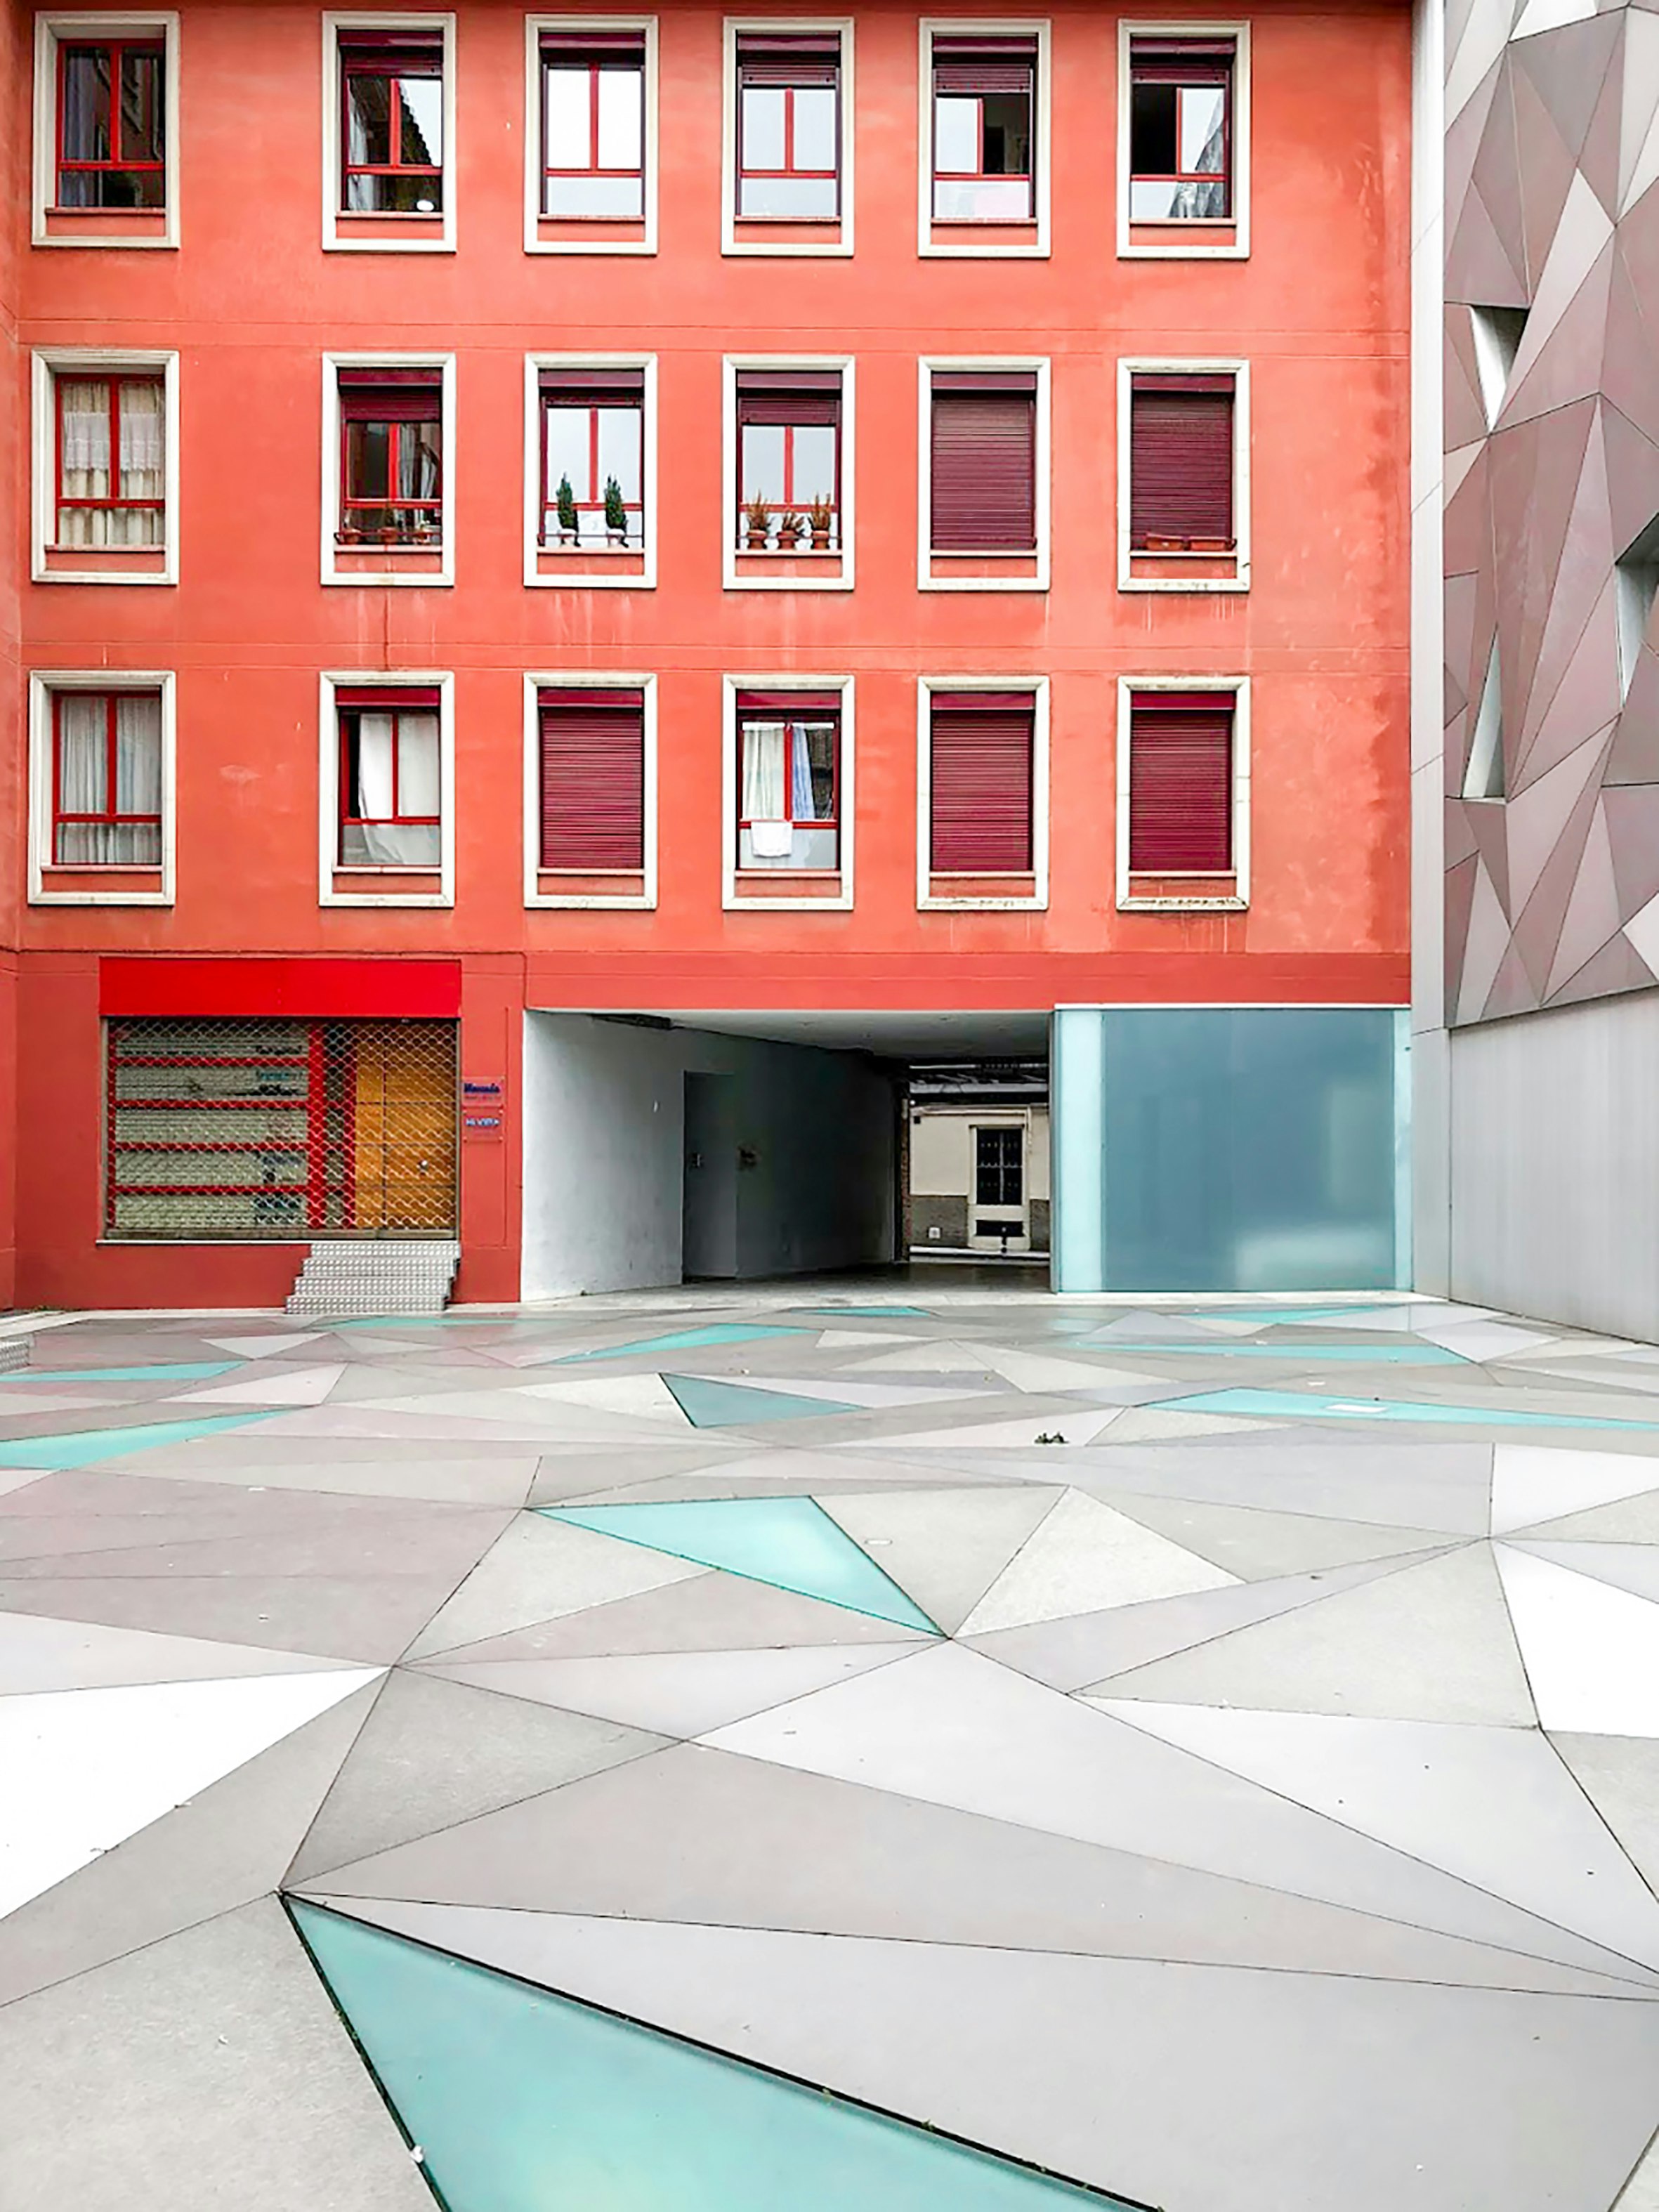 ABC Museum, Illustration and Design Center by Aranguren & Gallegos Architects, Madrid, Spain